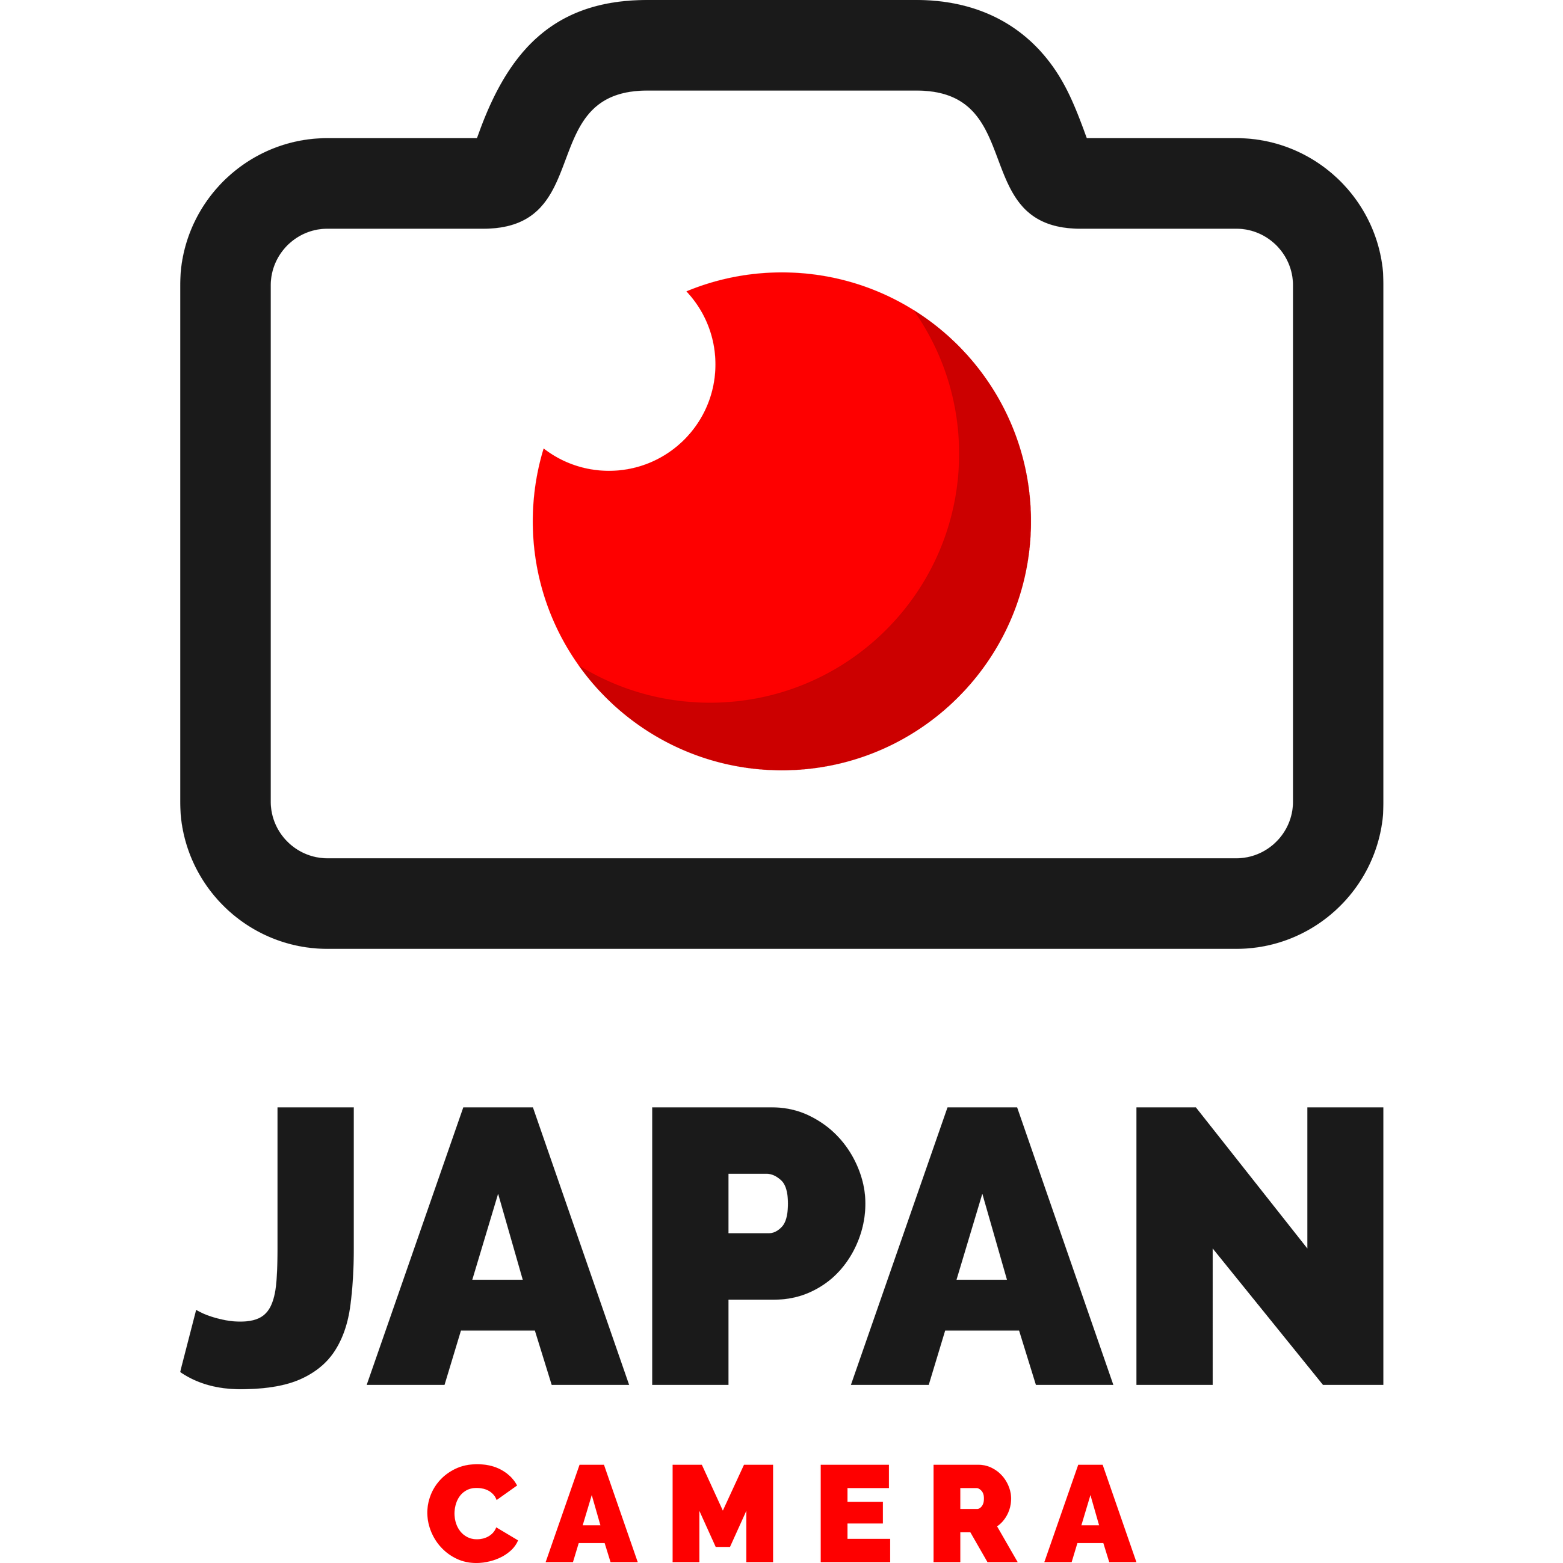 Japan Camera (ジャパン カメラ)